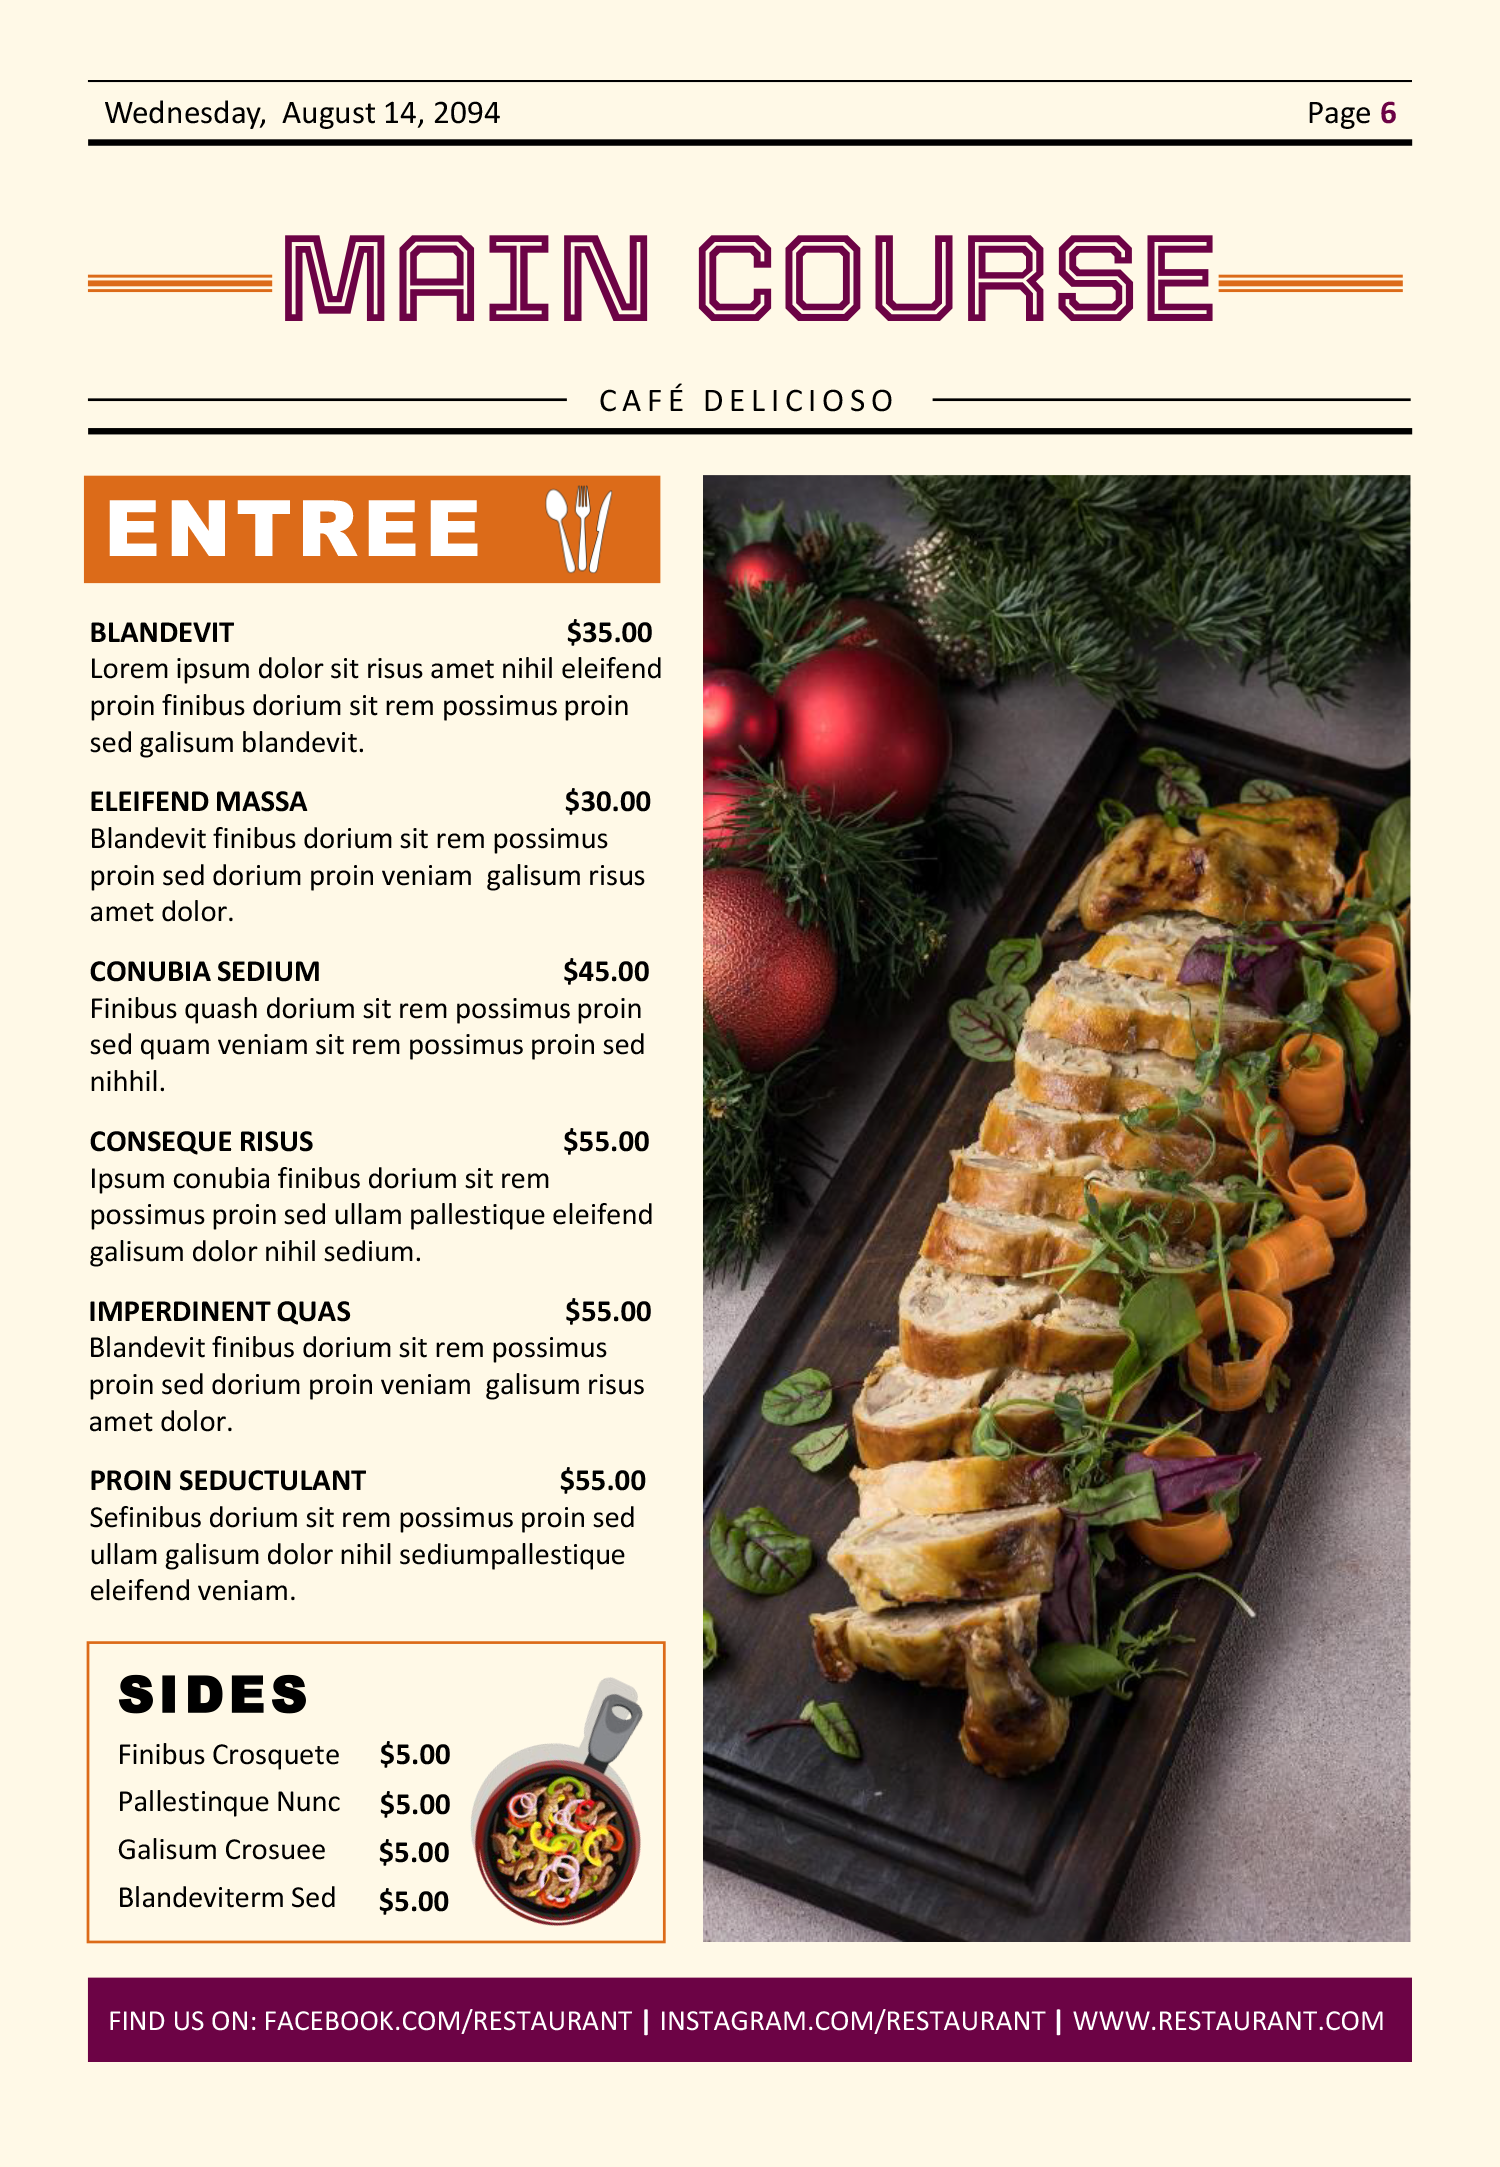 Restaurant Menu Newspaper Template - Page 06